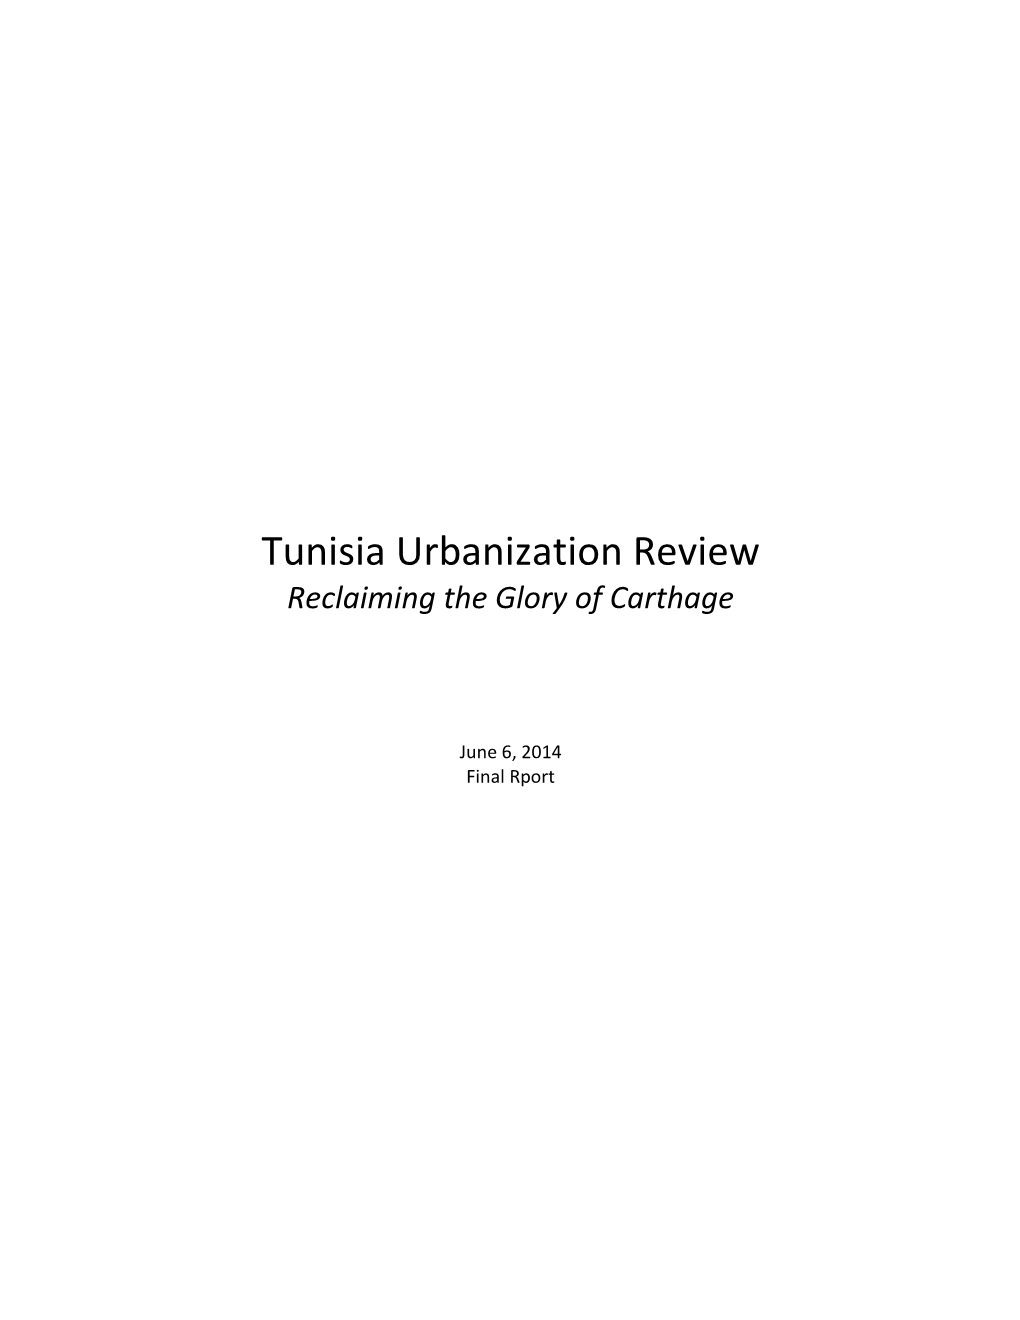 Tunisia Urbanization Review Reclaiming the Glory of Carthage